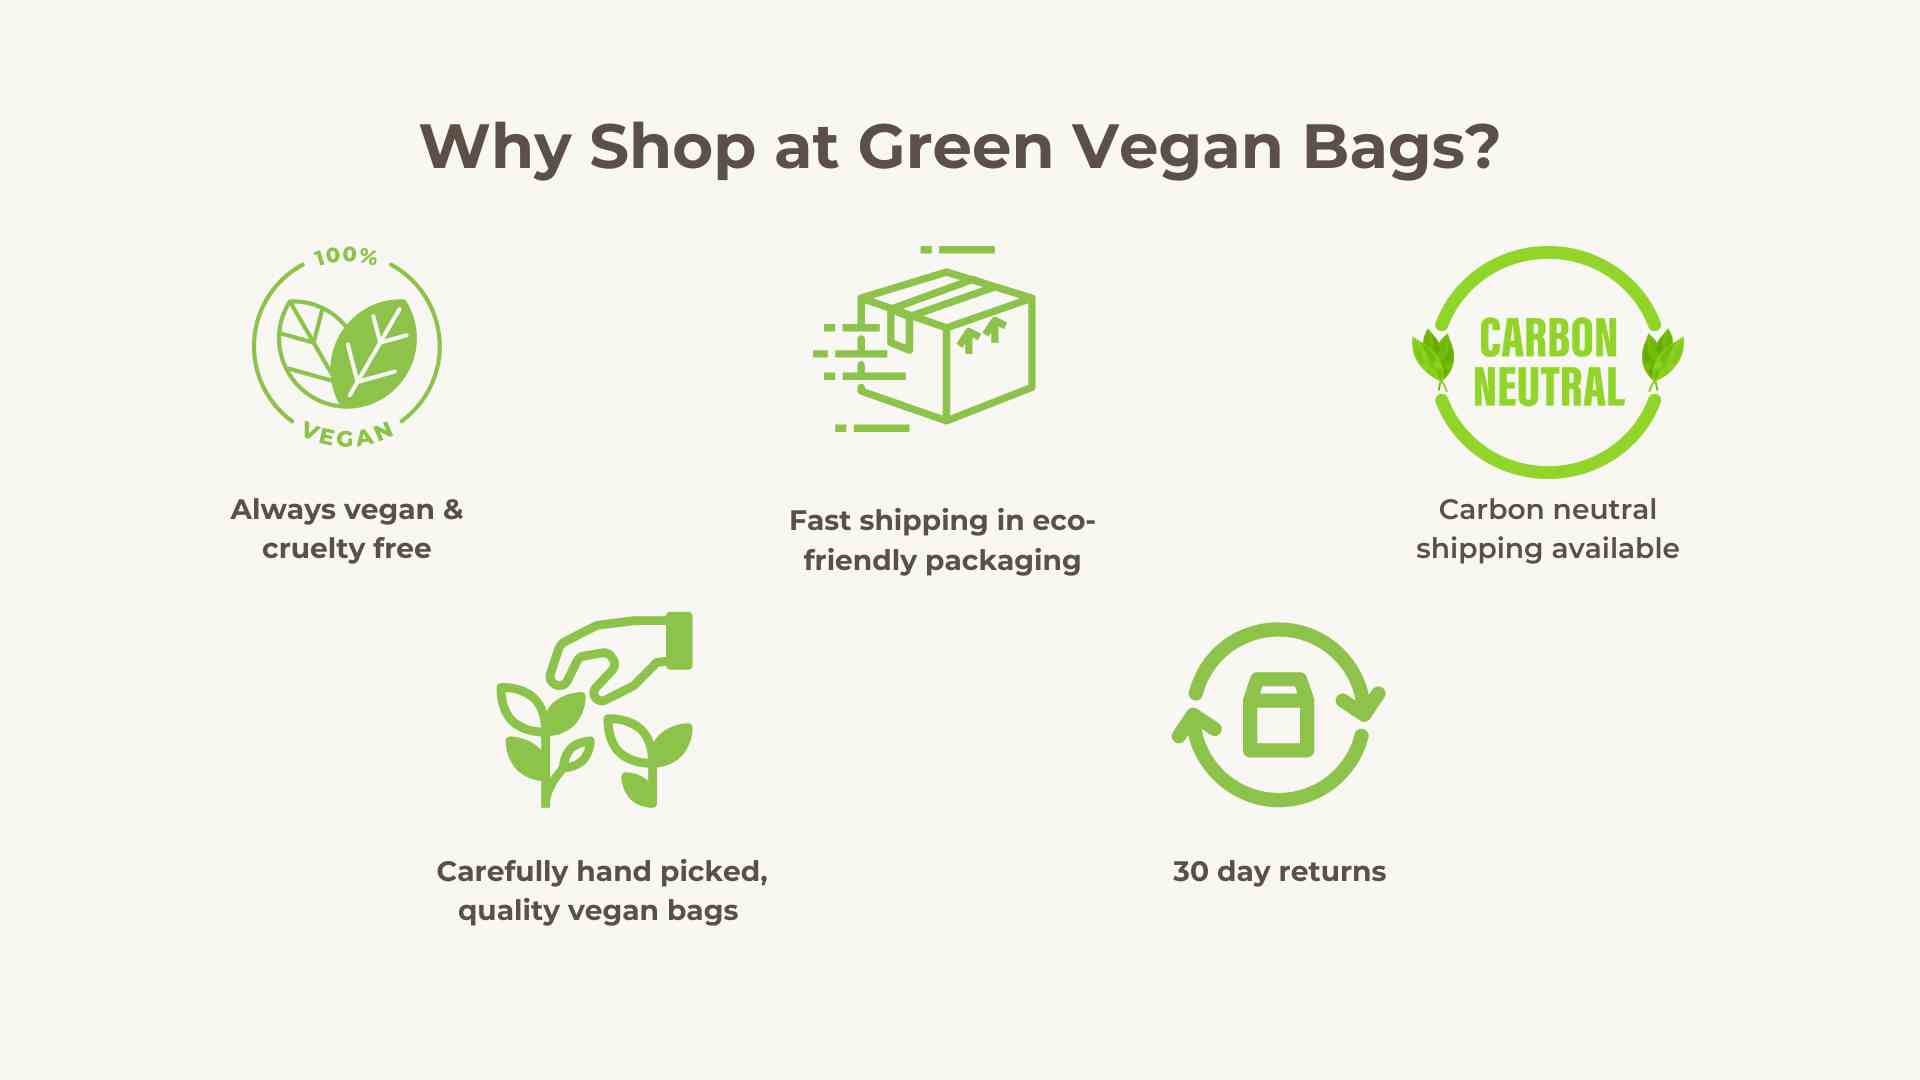 Why Shop at Green Vegan Bags